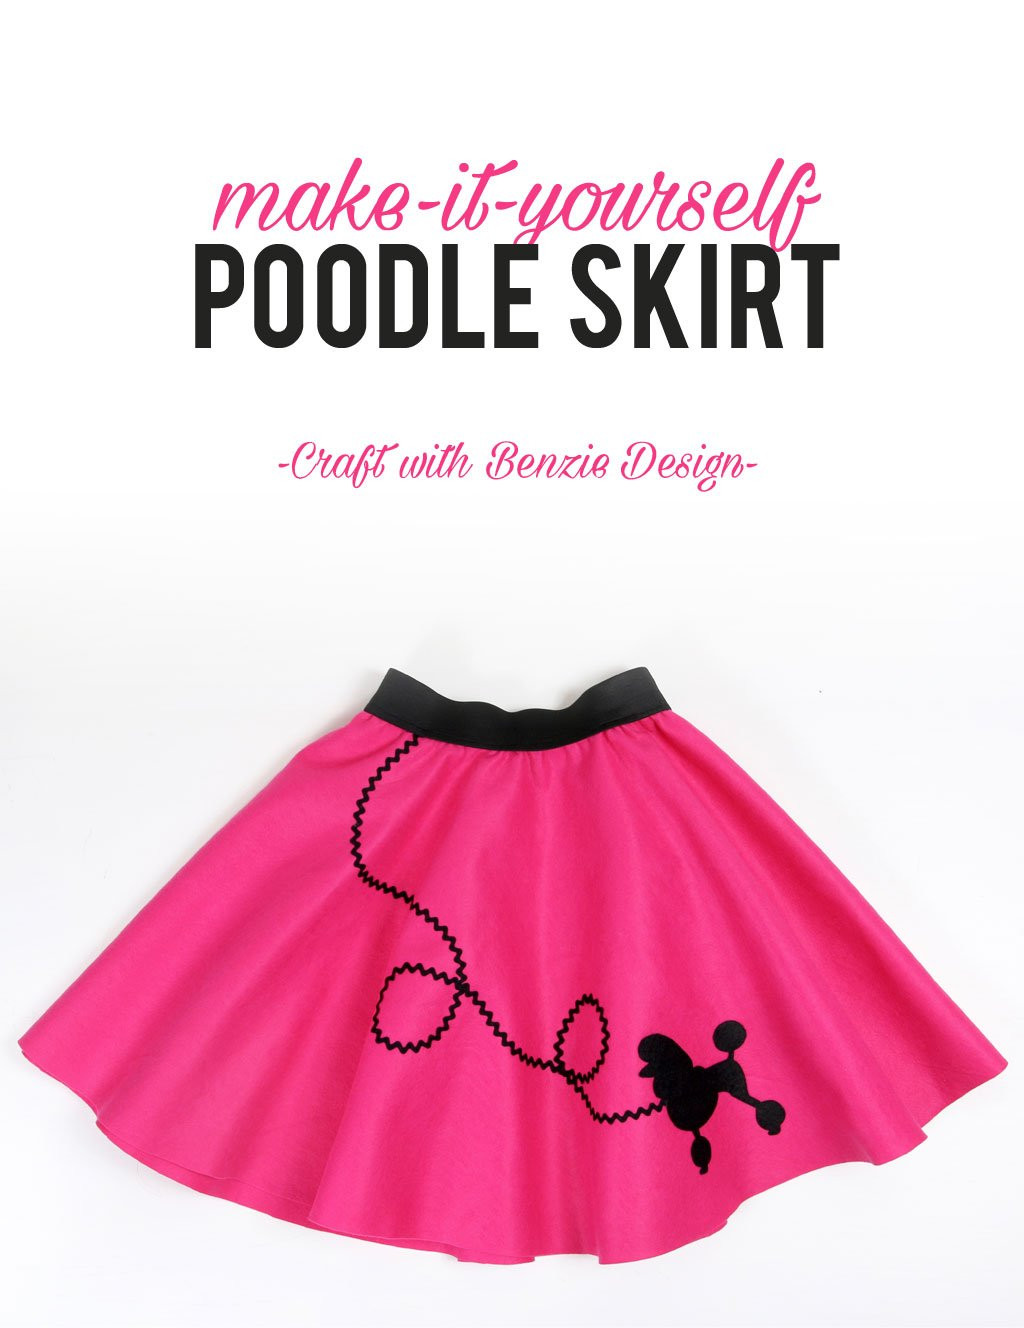 Best ideas about DIY Poodle Skirt
. Save or Pin Felt Poodle Skirt DIY Now.